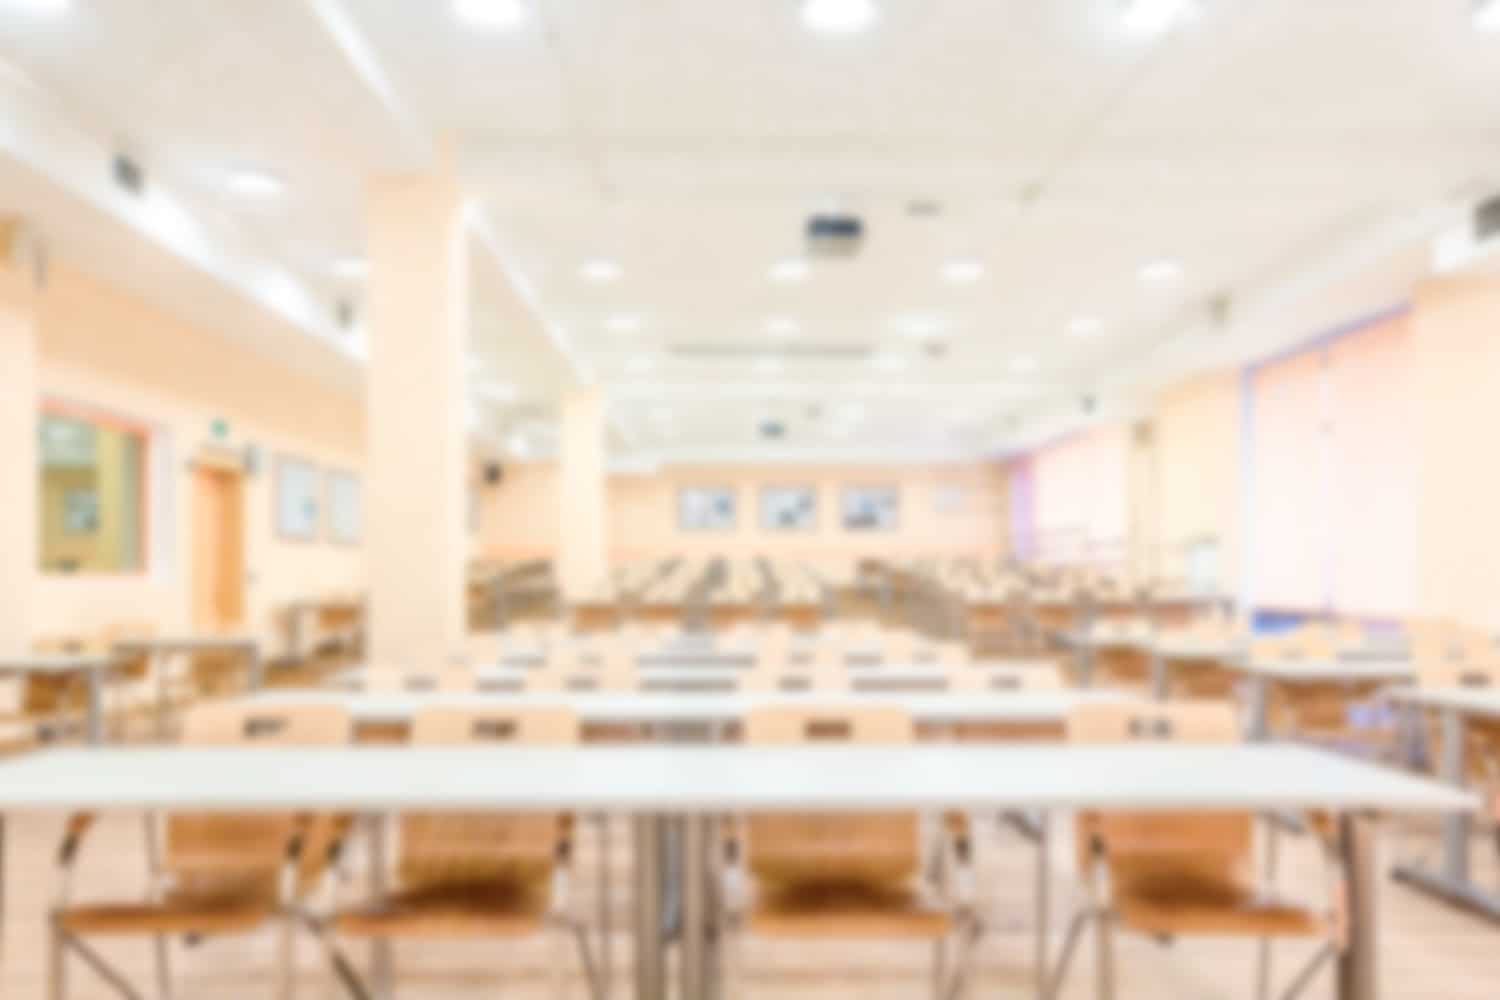 abstract blur interior empty university audiences modern school classroom